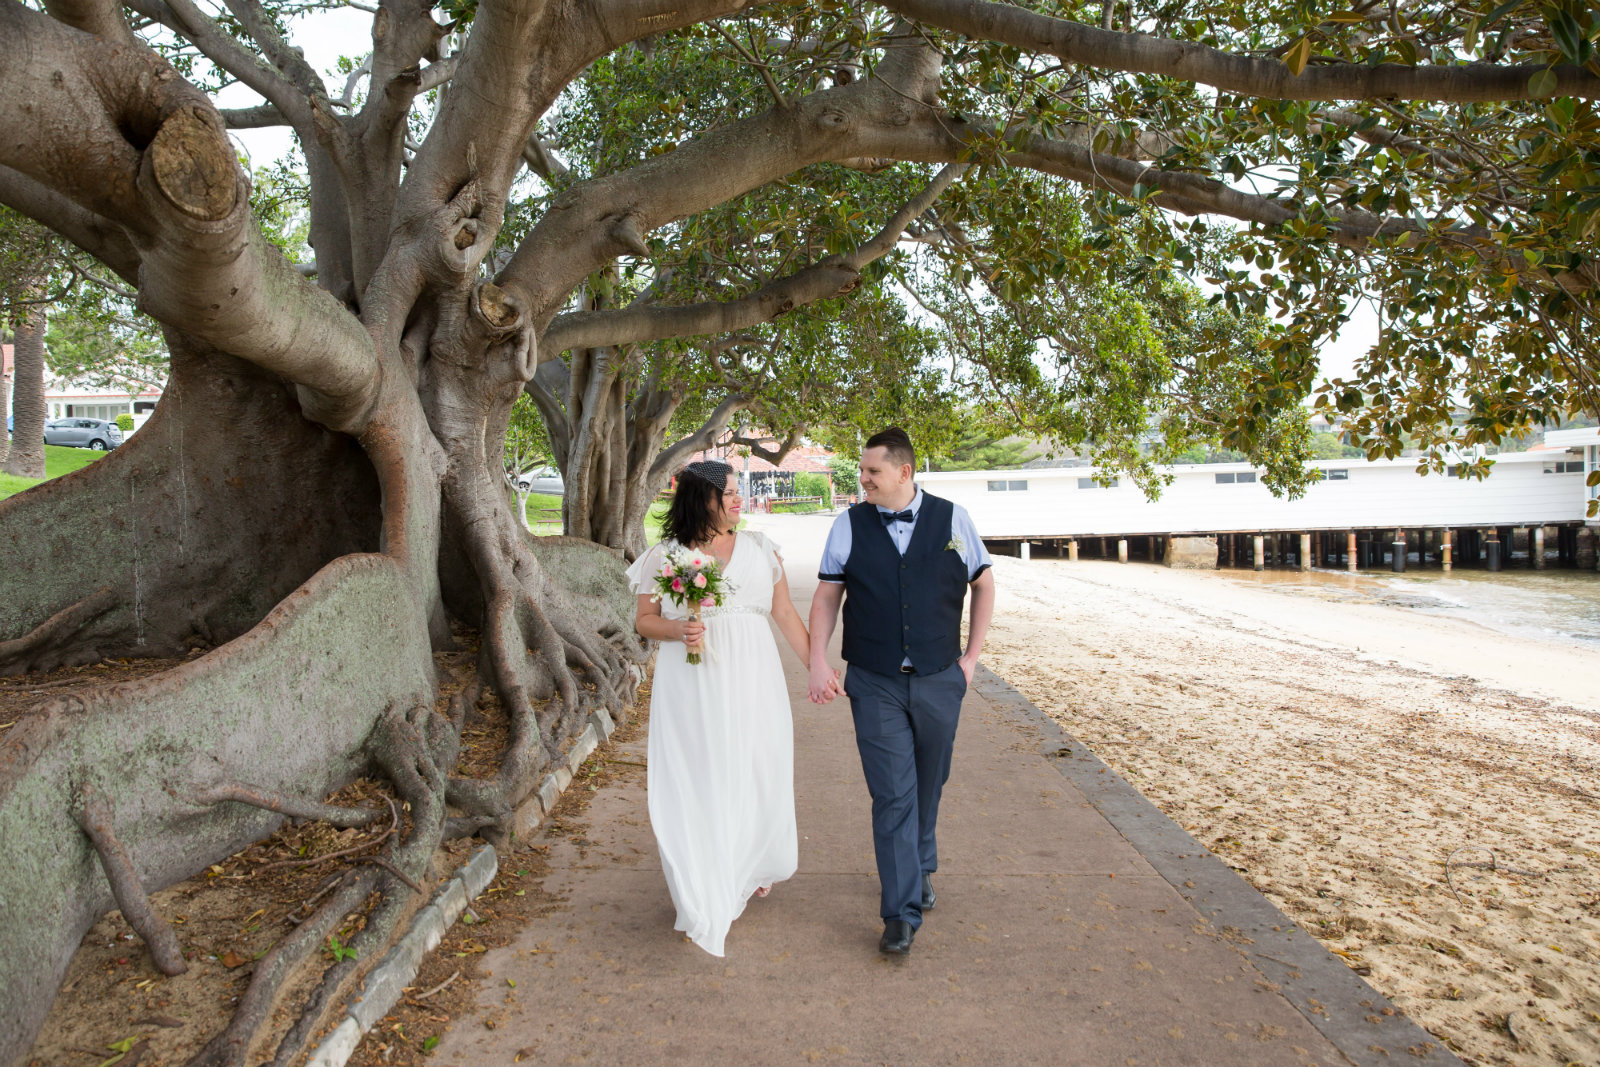 Tasha James and husband Chris on their wedding day beneath a tree